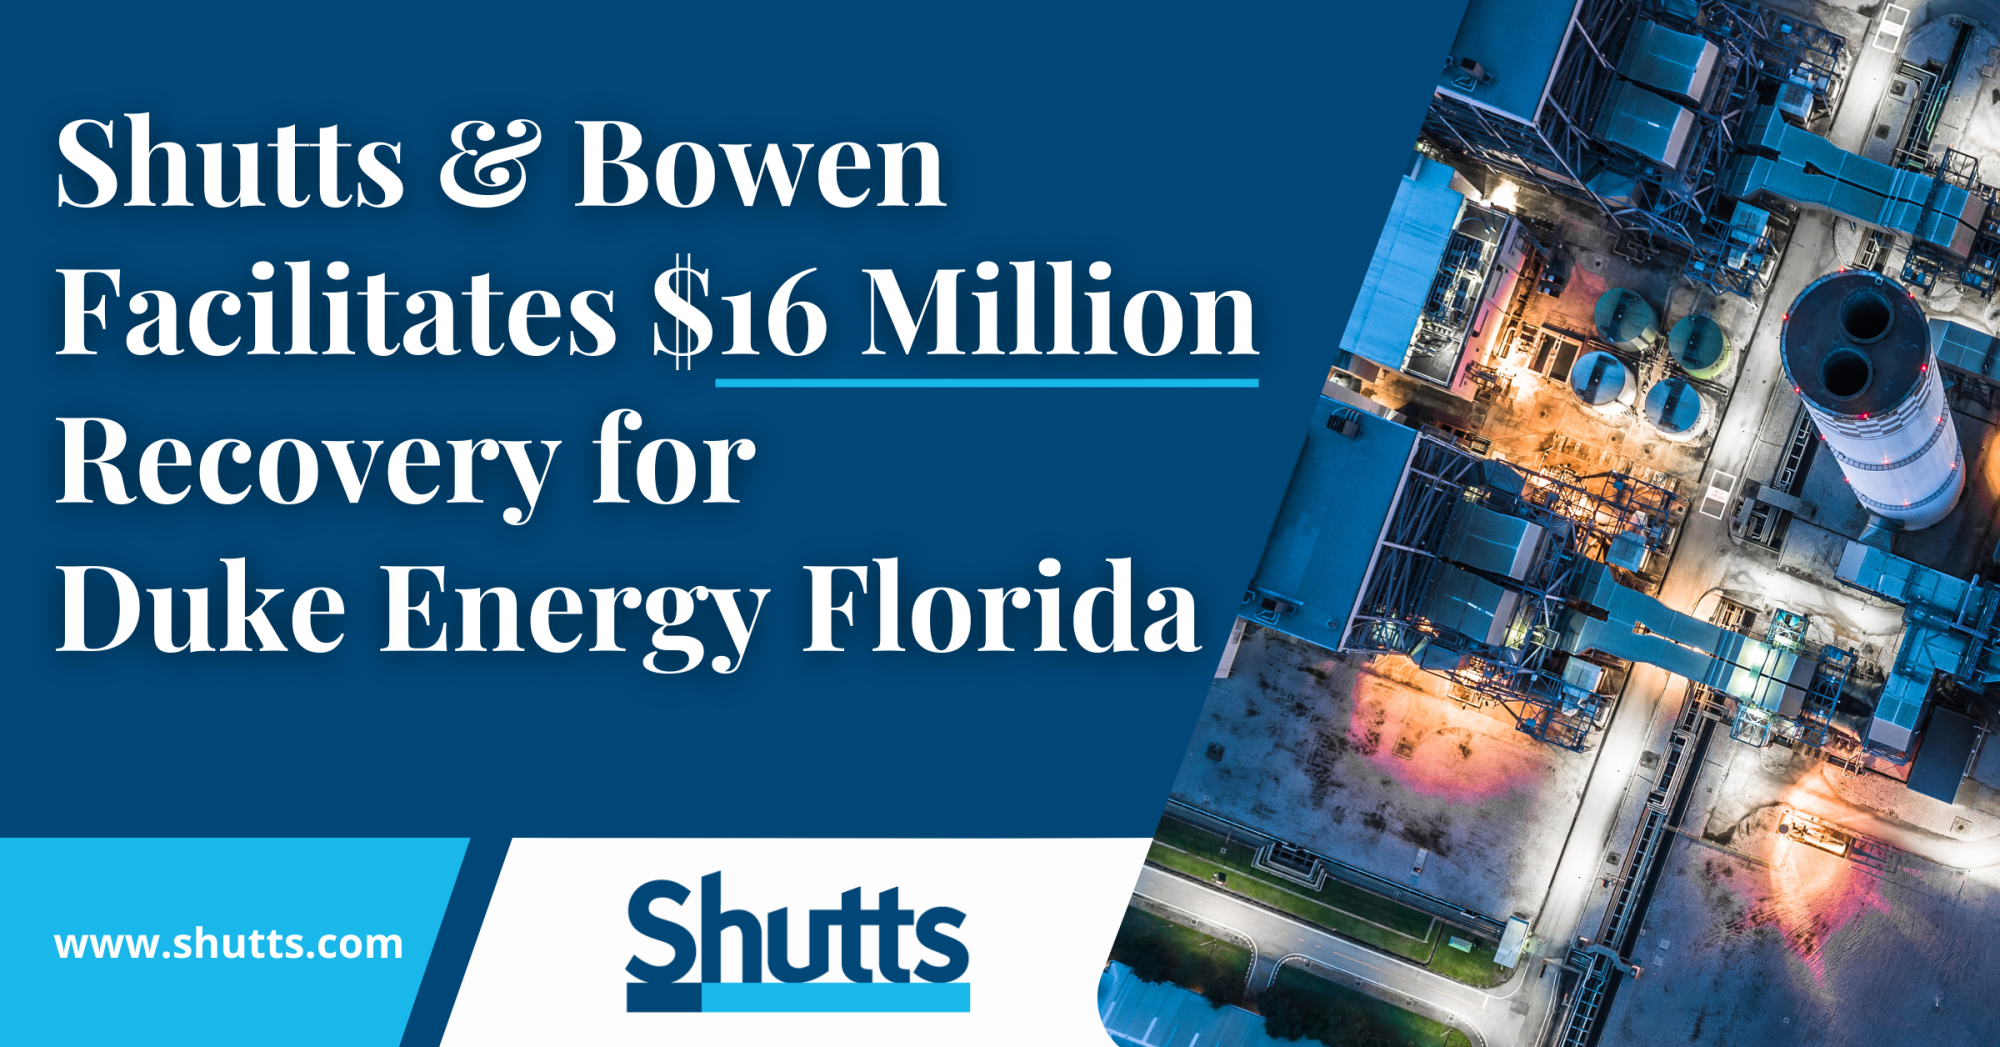 Shutts & Bowen Facilitates $16 Million Recovery for Duke Energy Florida